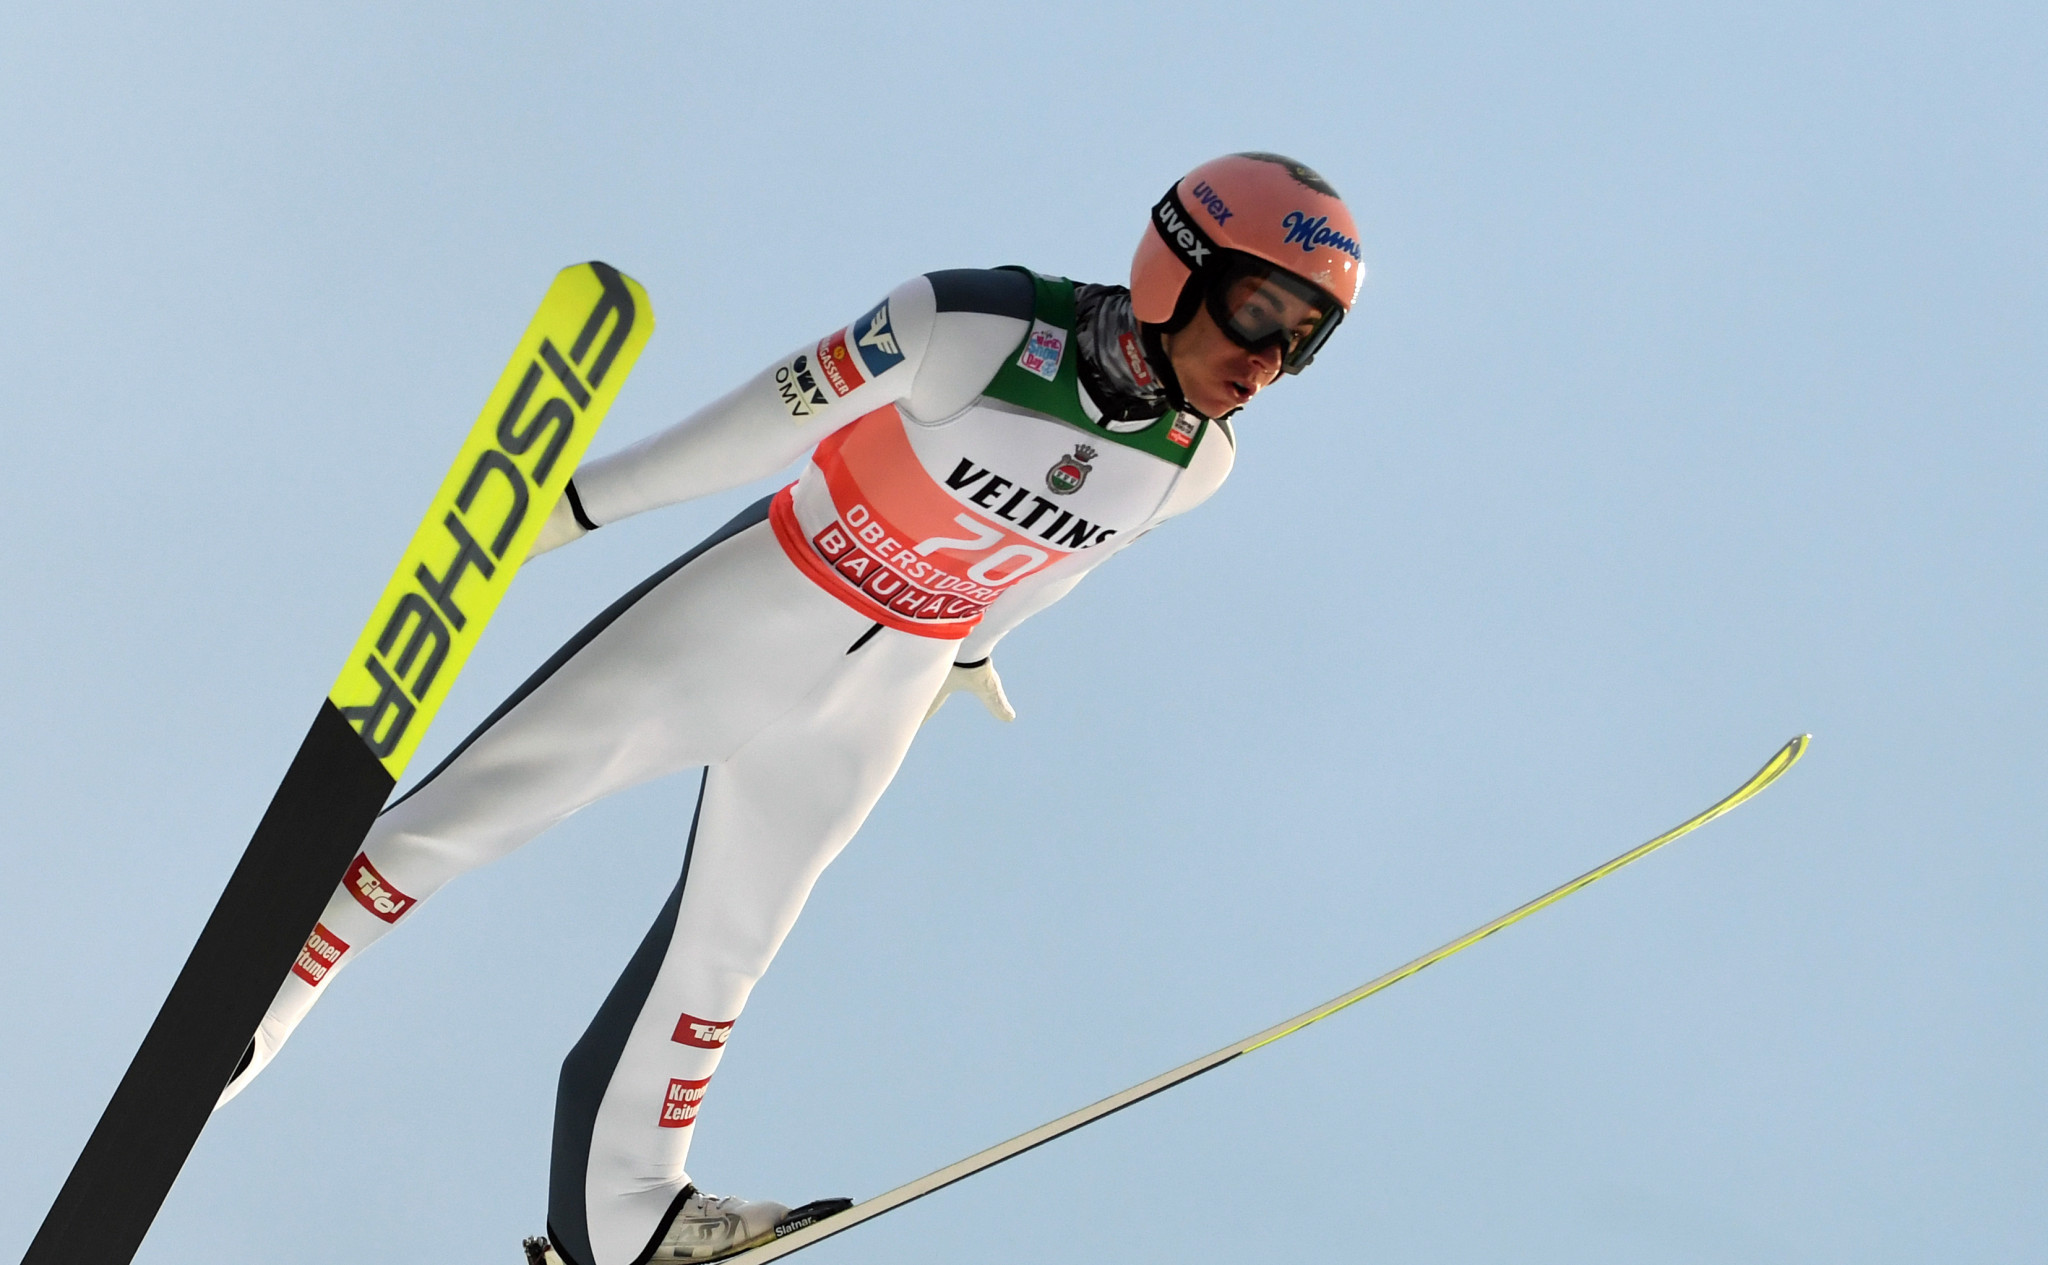 Kraft tops qualifying for Four Hills Tournament opener in Oberstdorf